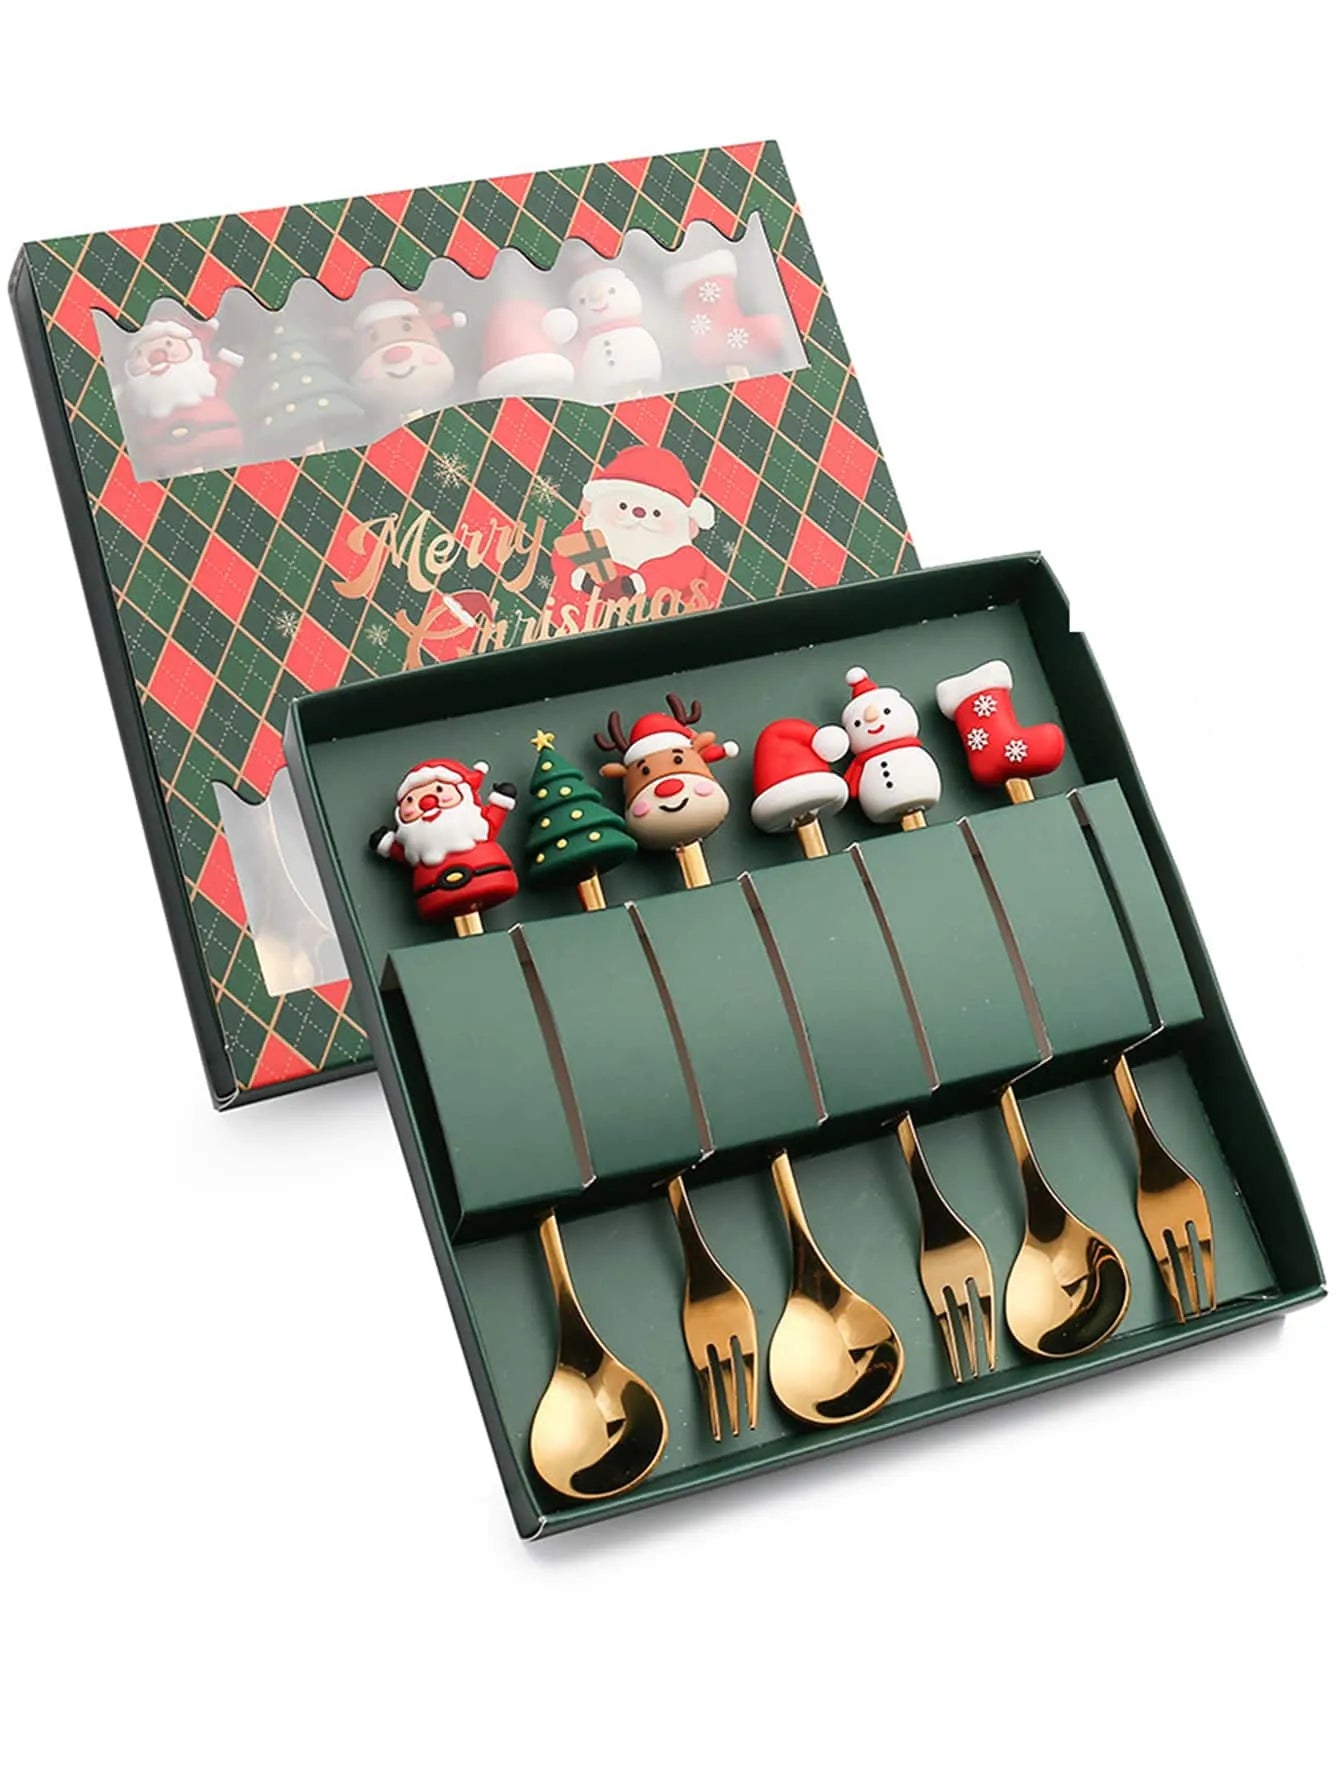 Christmas Coffee Spoons Forks Set (4/6Pcs), Stainless Steel Spoon Forks Christmas Gifts for Kids(Red/Green Gift Box Set)